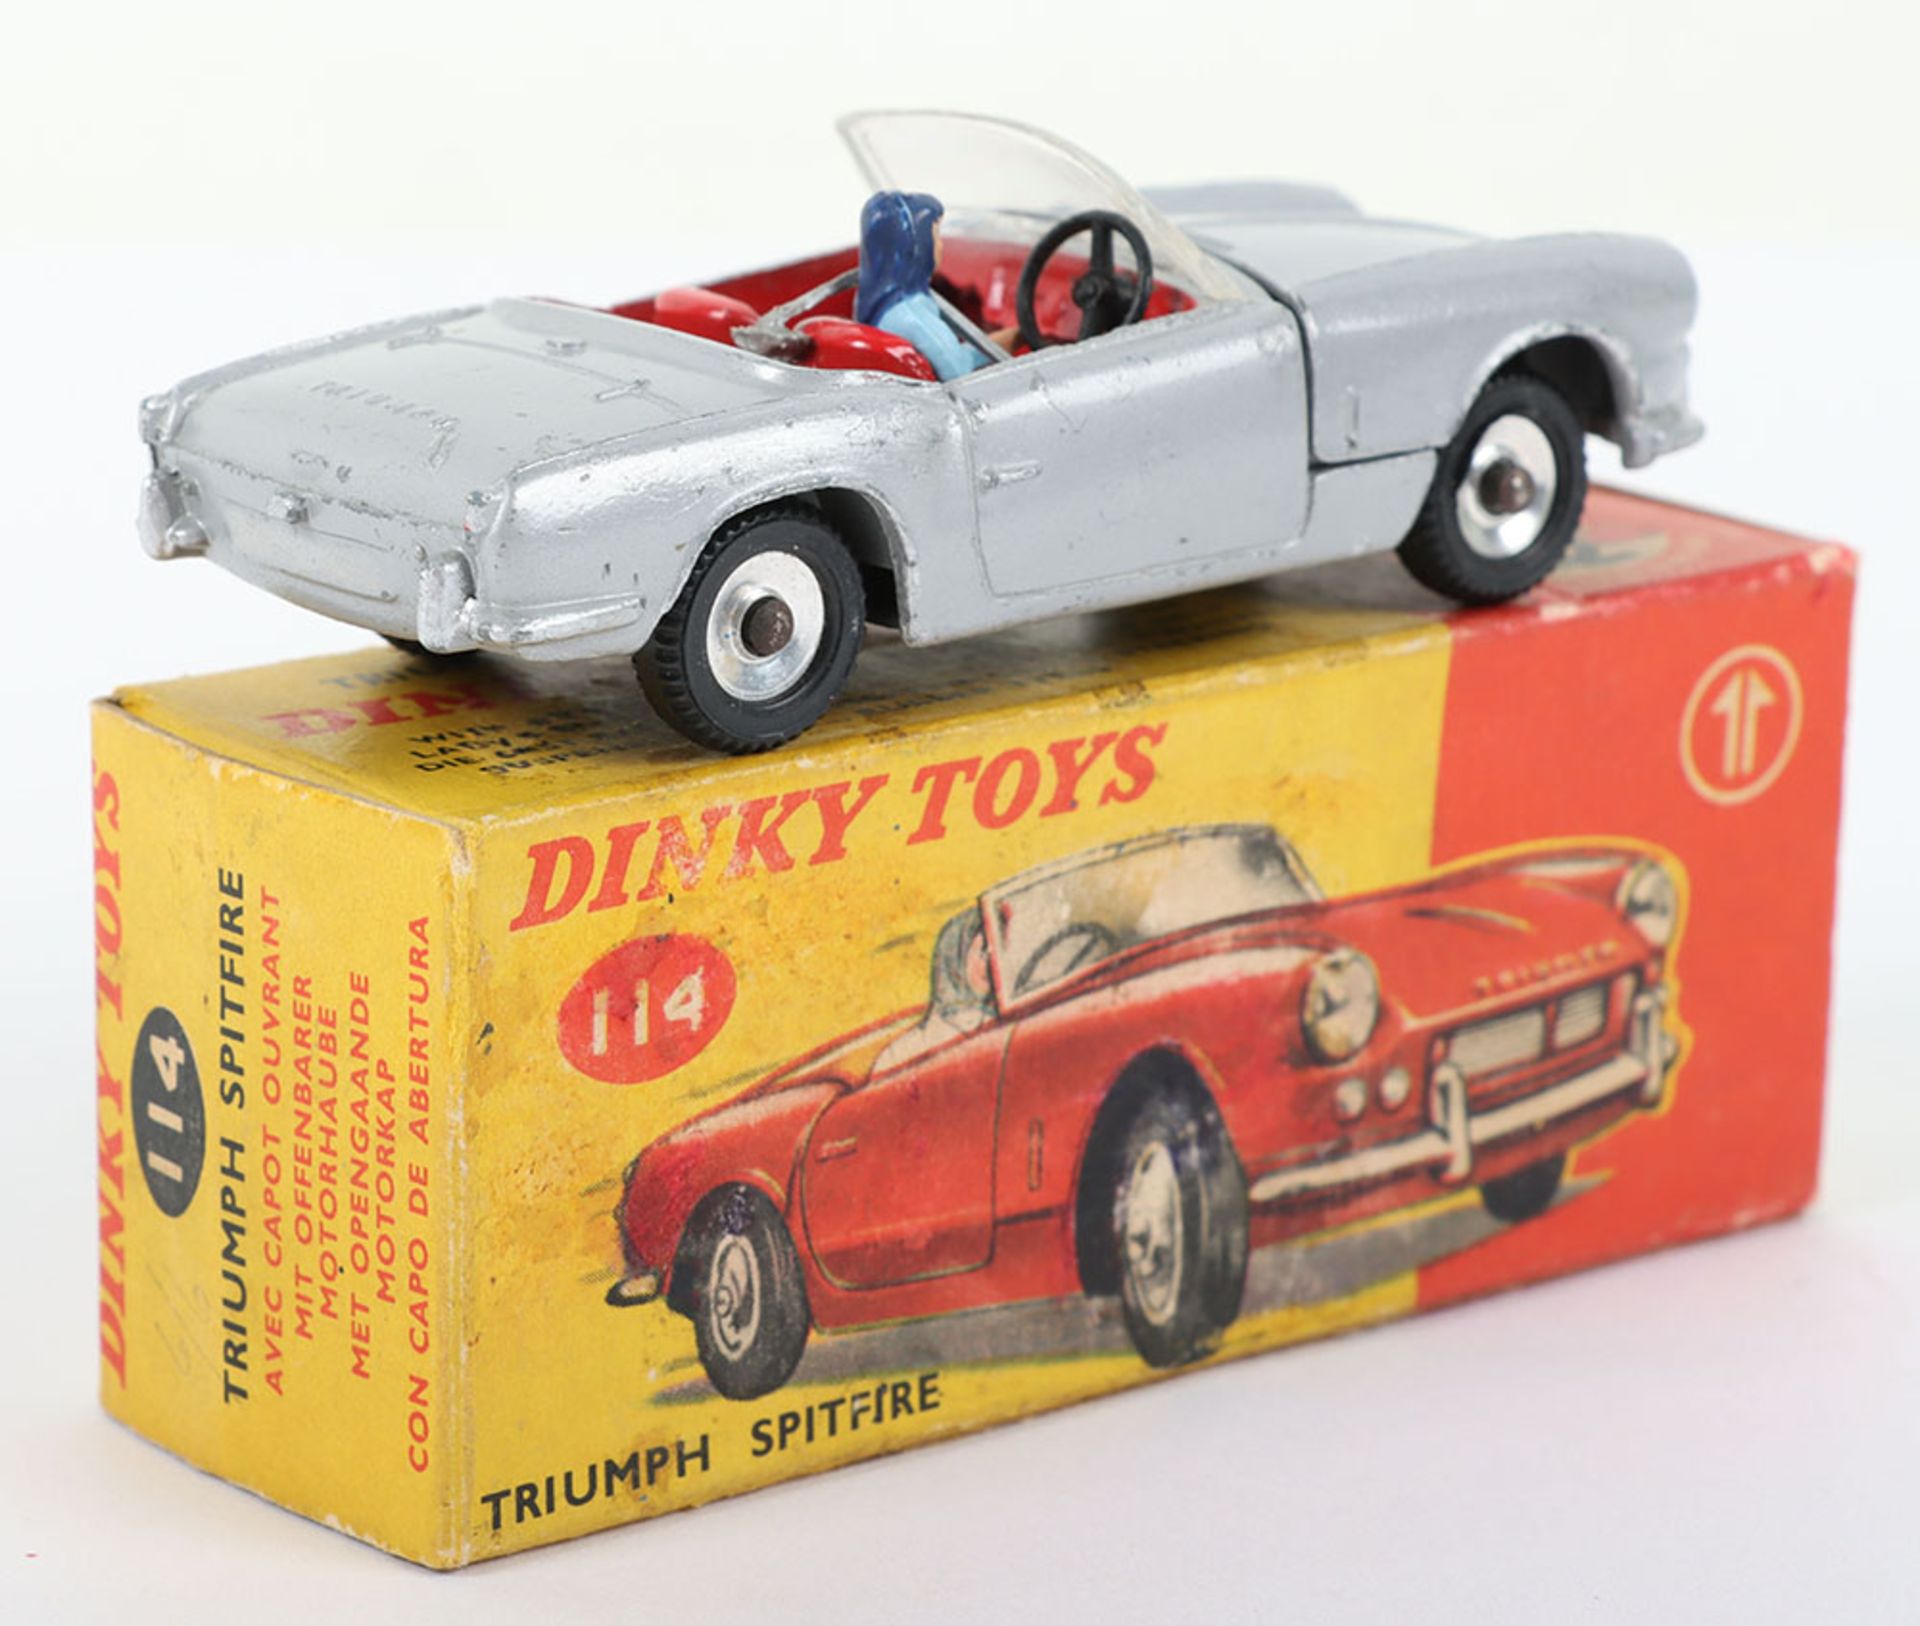 Dinky Toys 114 Triumph Spitfire Car - Image 2 of 3